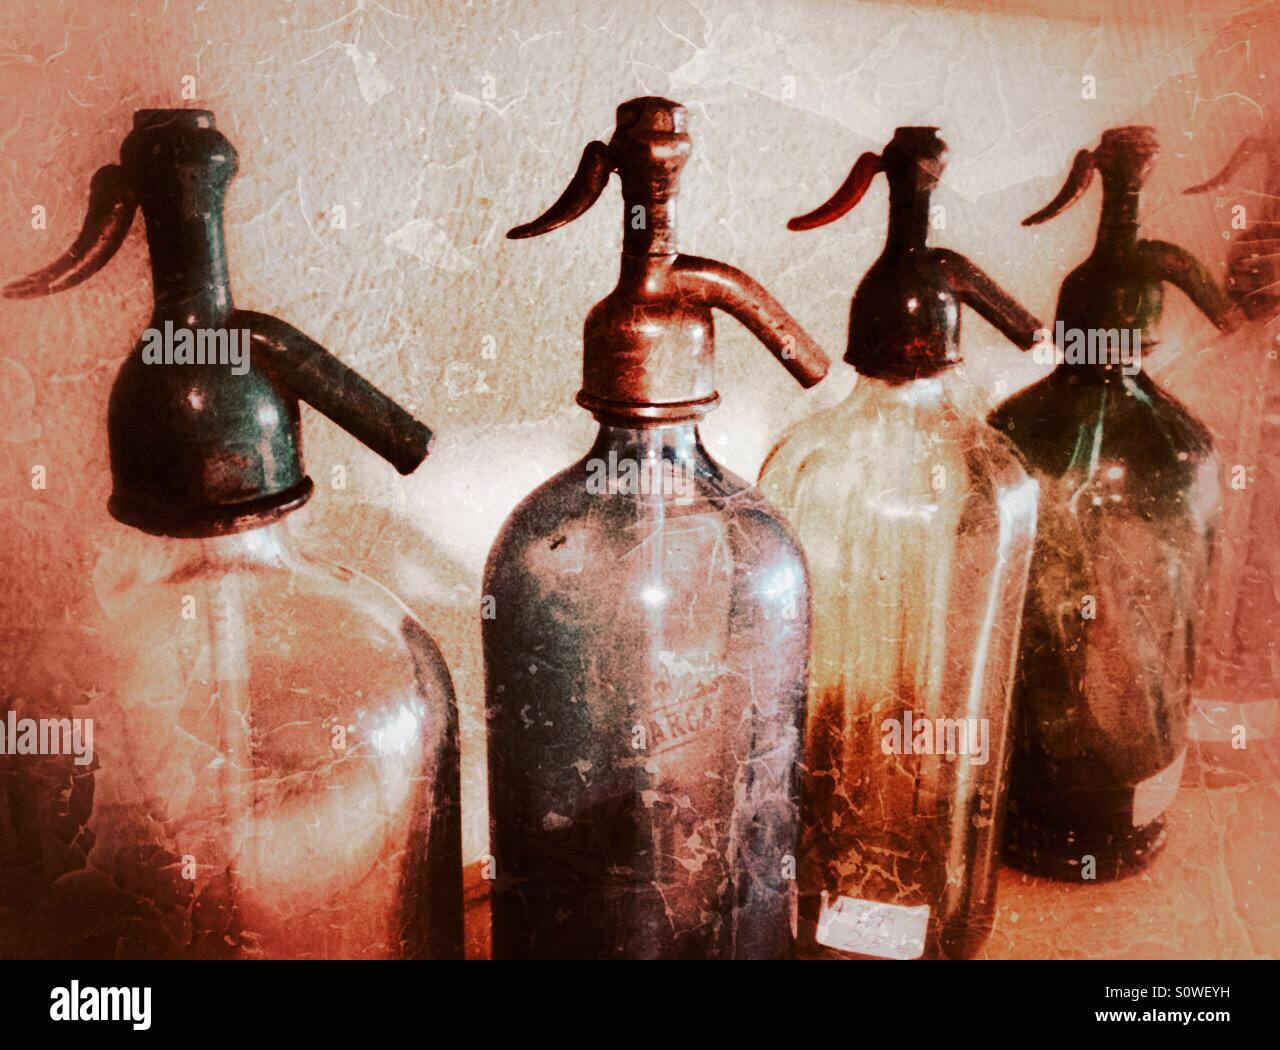 Vintage bottles Stock Photo